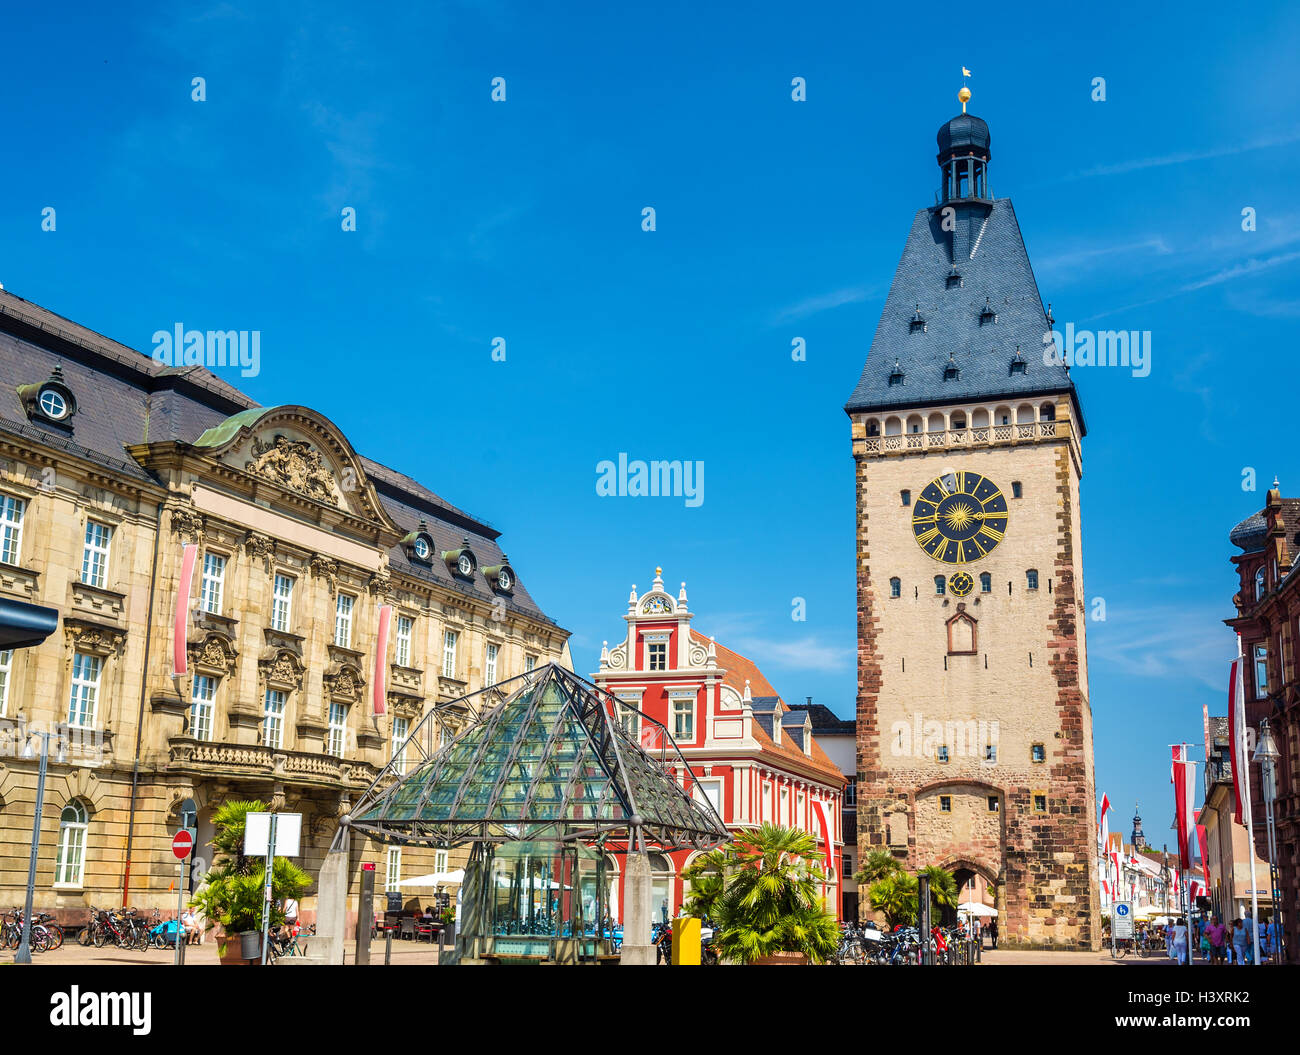 The Old Gate of Speyer - Germany, Rhineland-Palatinate Stock Photo